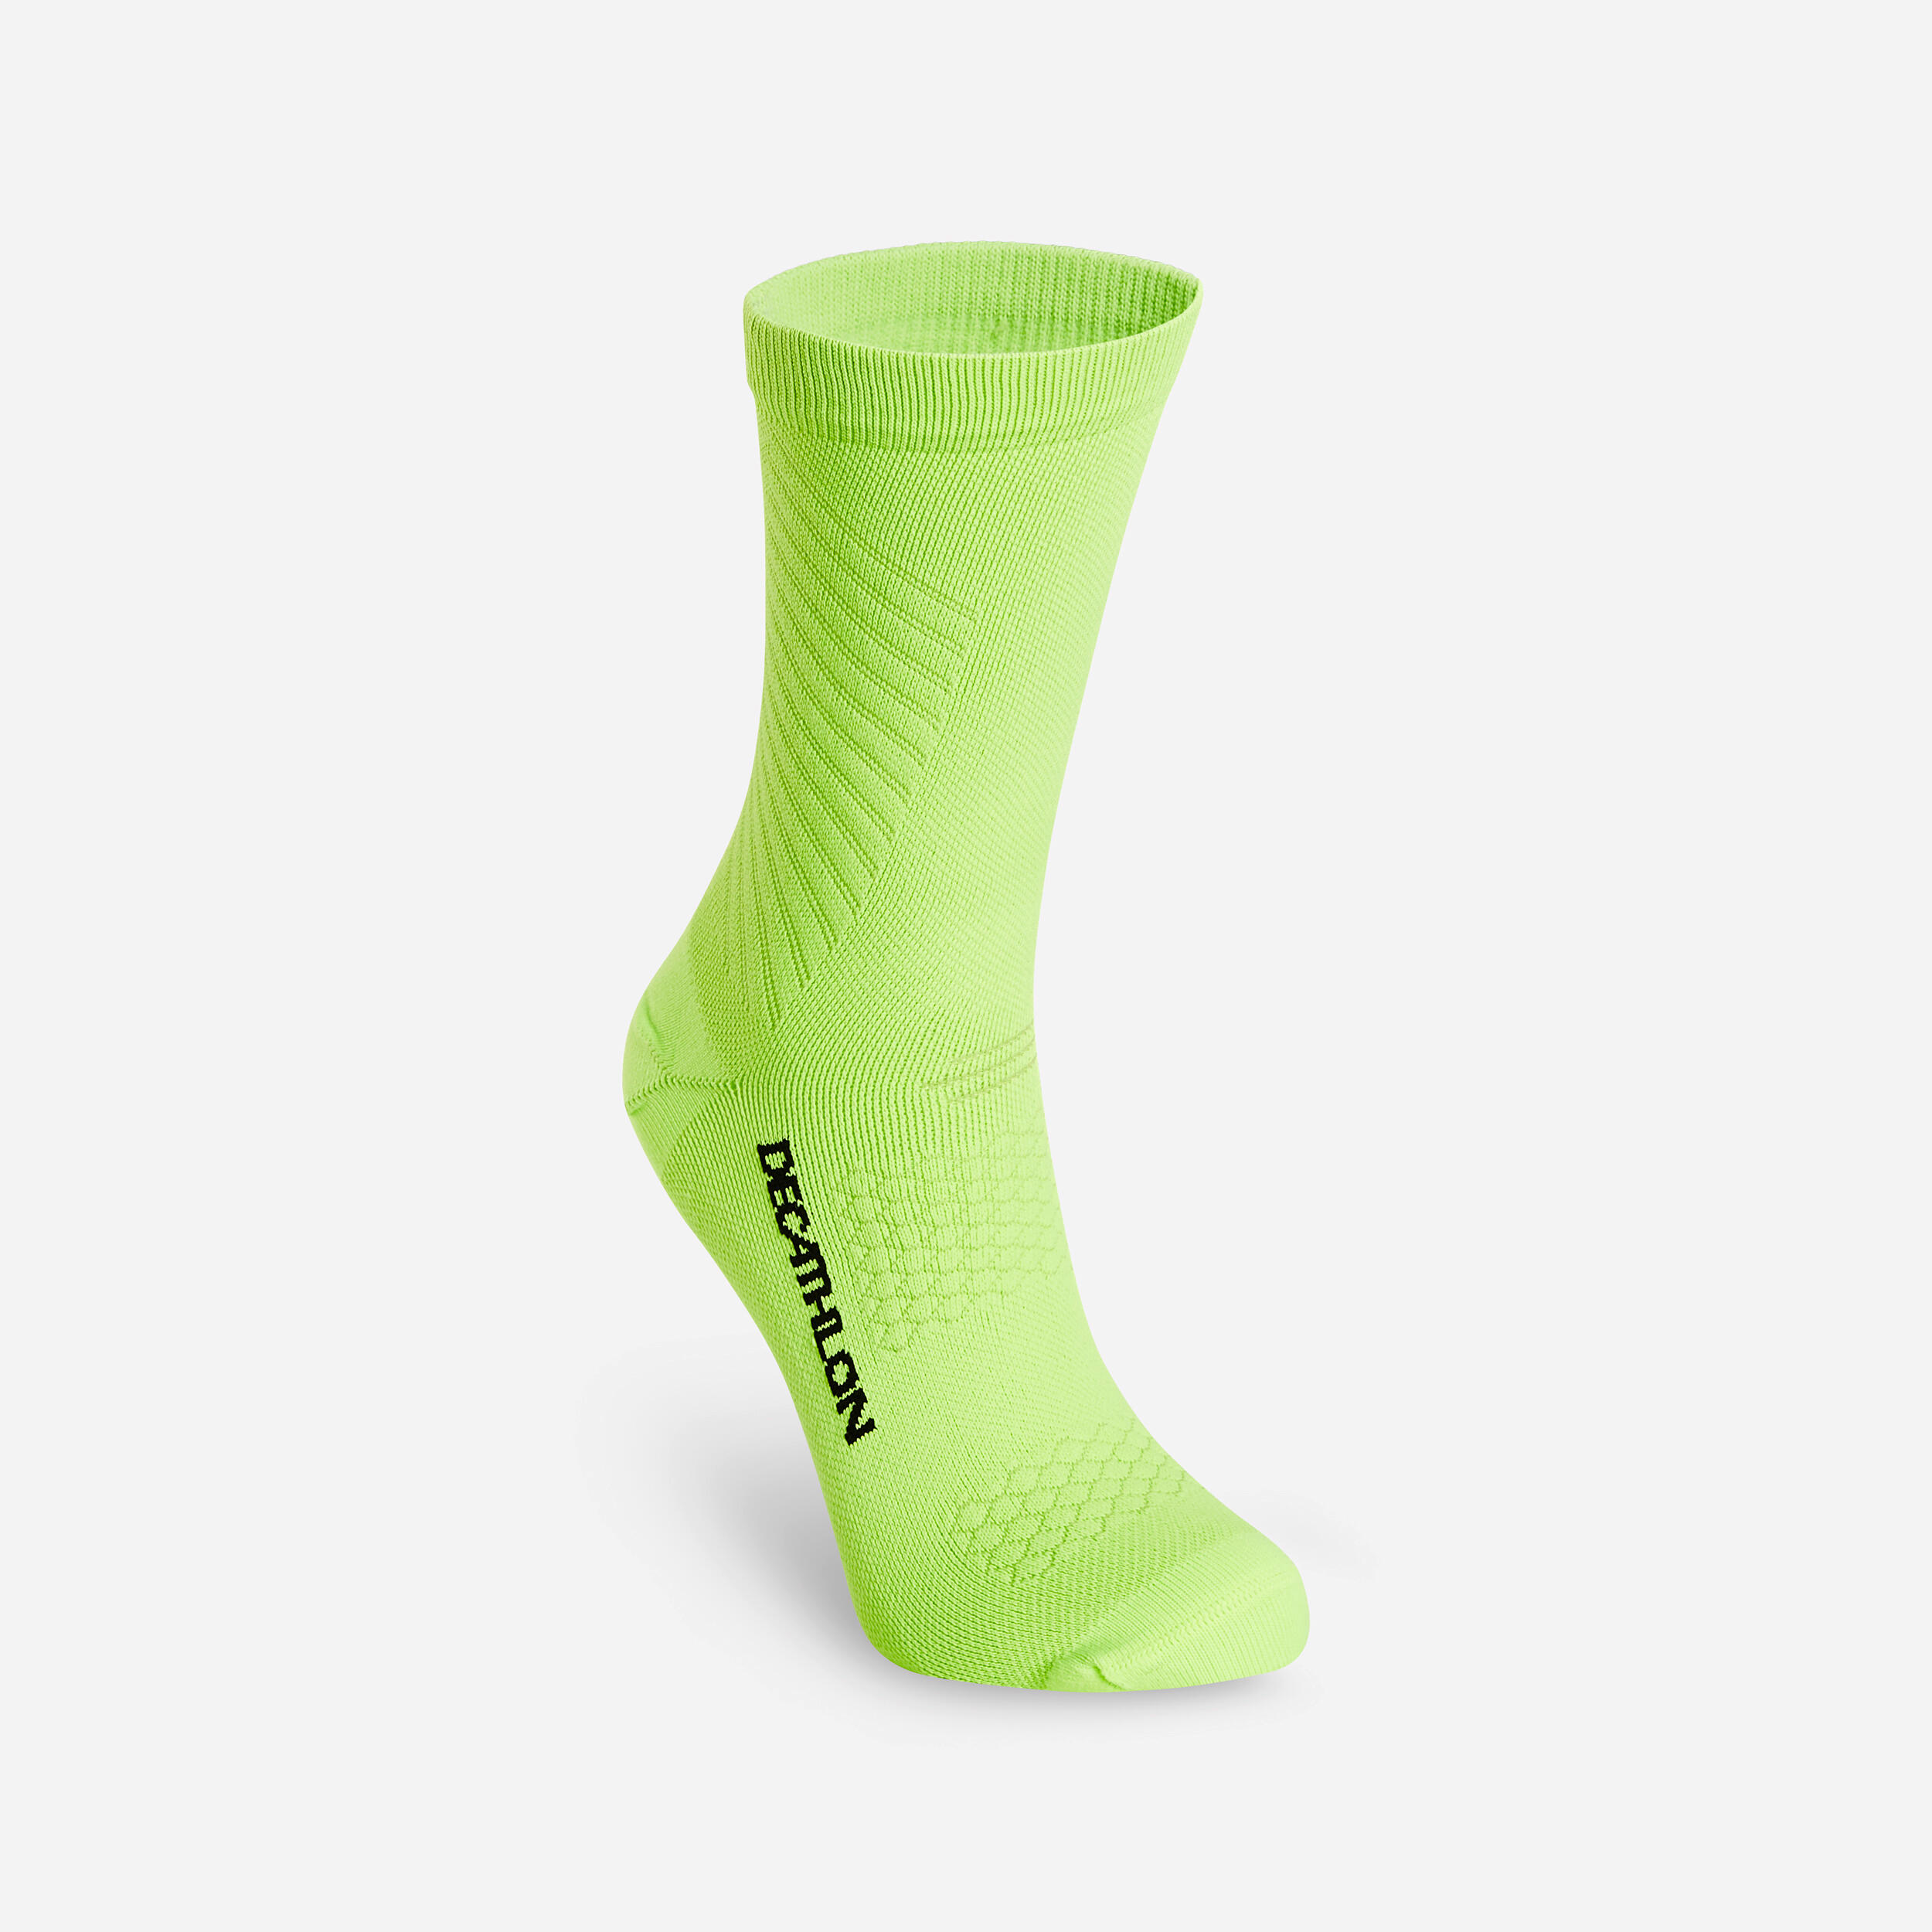 RoadR 900 cycling socks - Fluo lime yellow - Van rysel - Decathlon